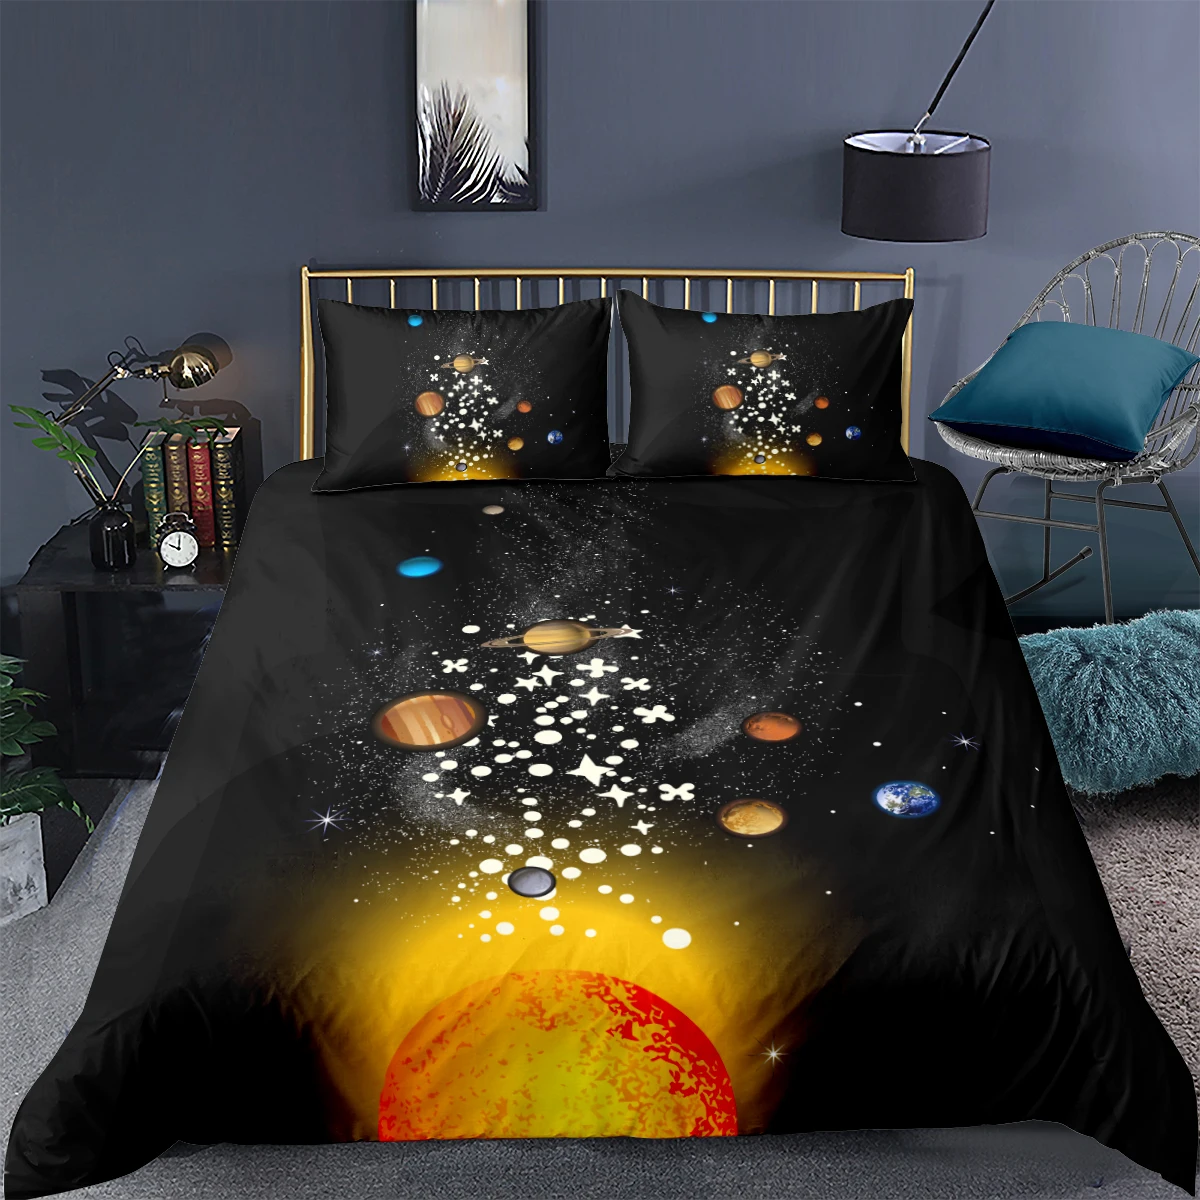 

3D Black Bedding Set Starrysky Duvet Cover Sets Modern Comforter Cases Pillow Slips Full Double Single Twin Queen Size 140*210cm